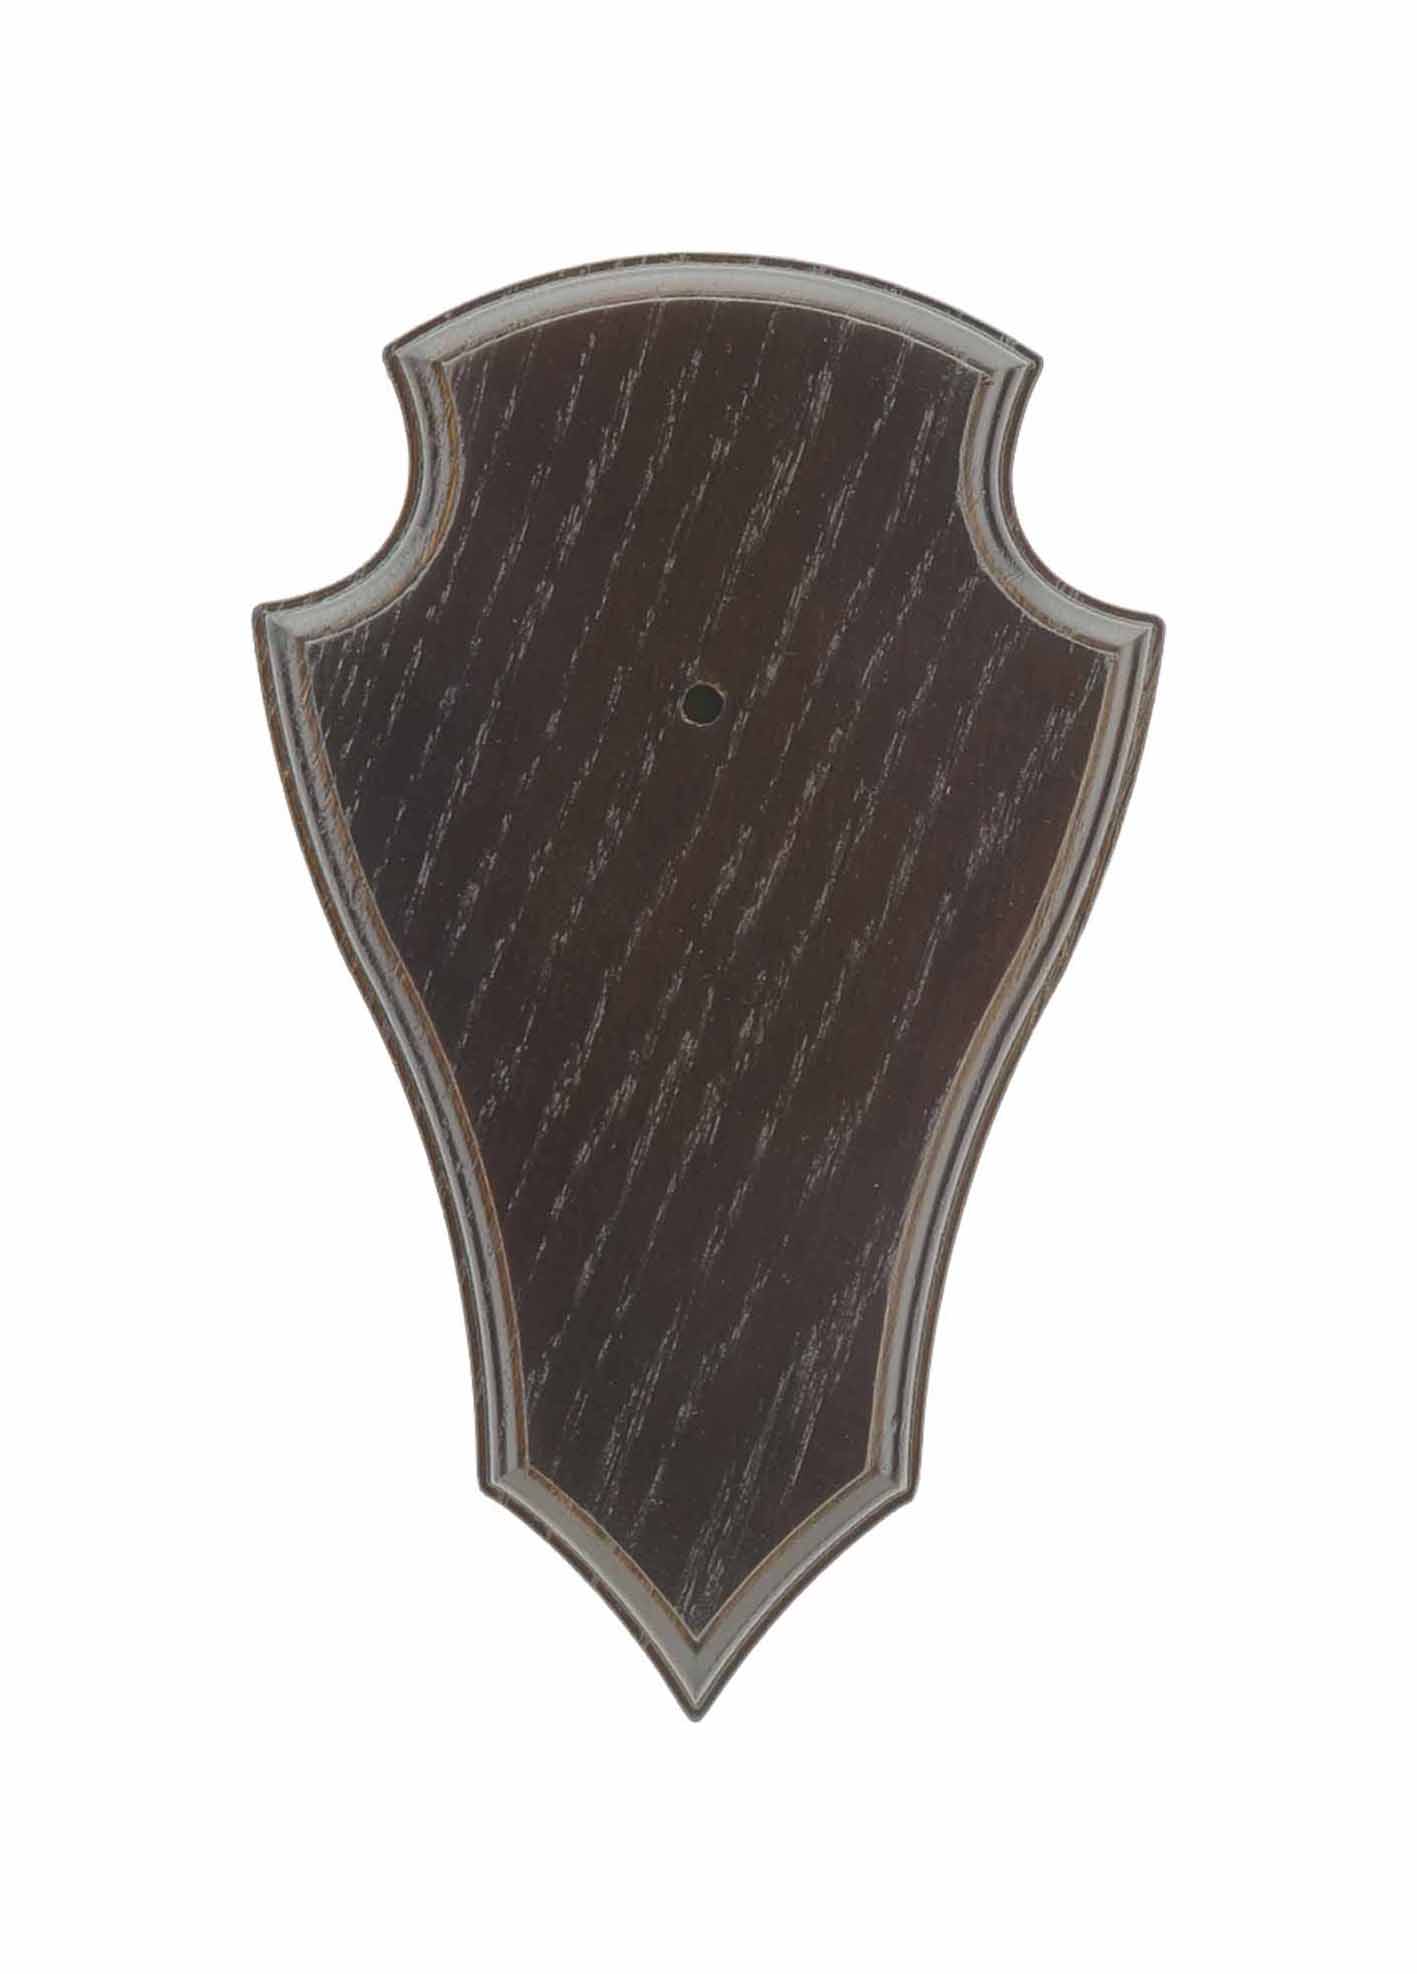 Oak Deer Trophy Plate 2 - 22x13 cm Dark Set 10pcs. with metal clamps